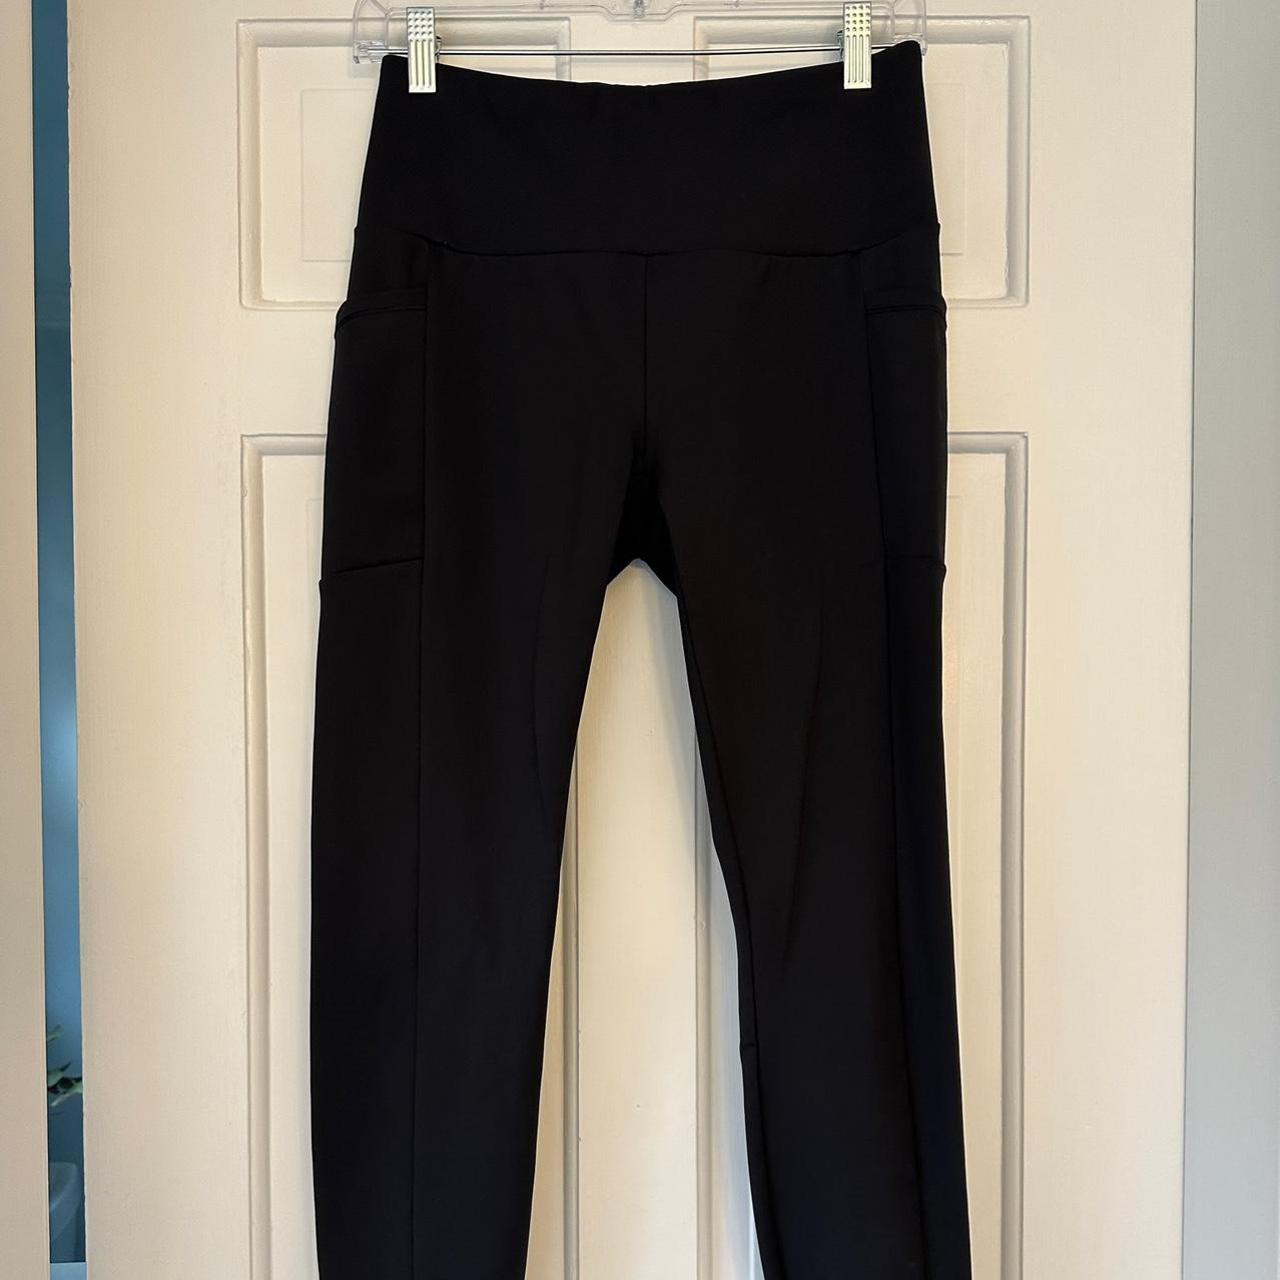 RBX Activewear 7/8 Black Leggings with Pockets Size - Depop